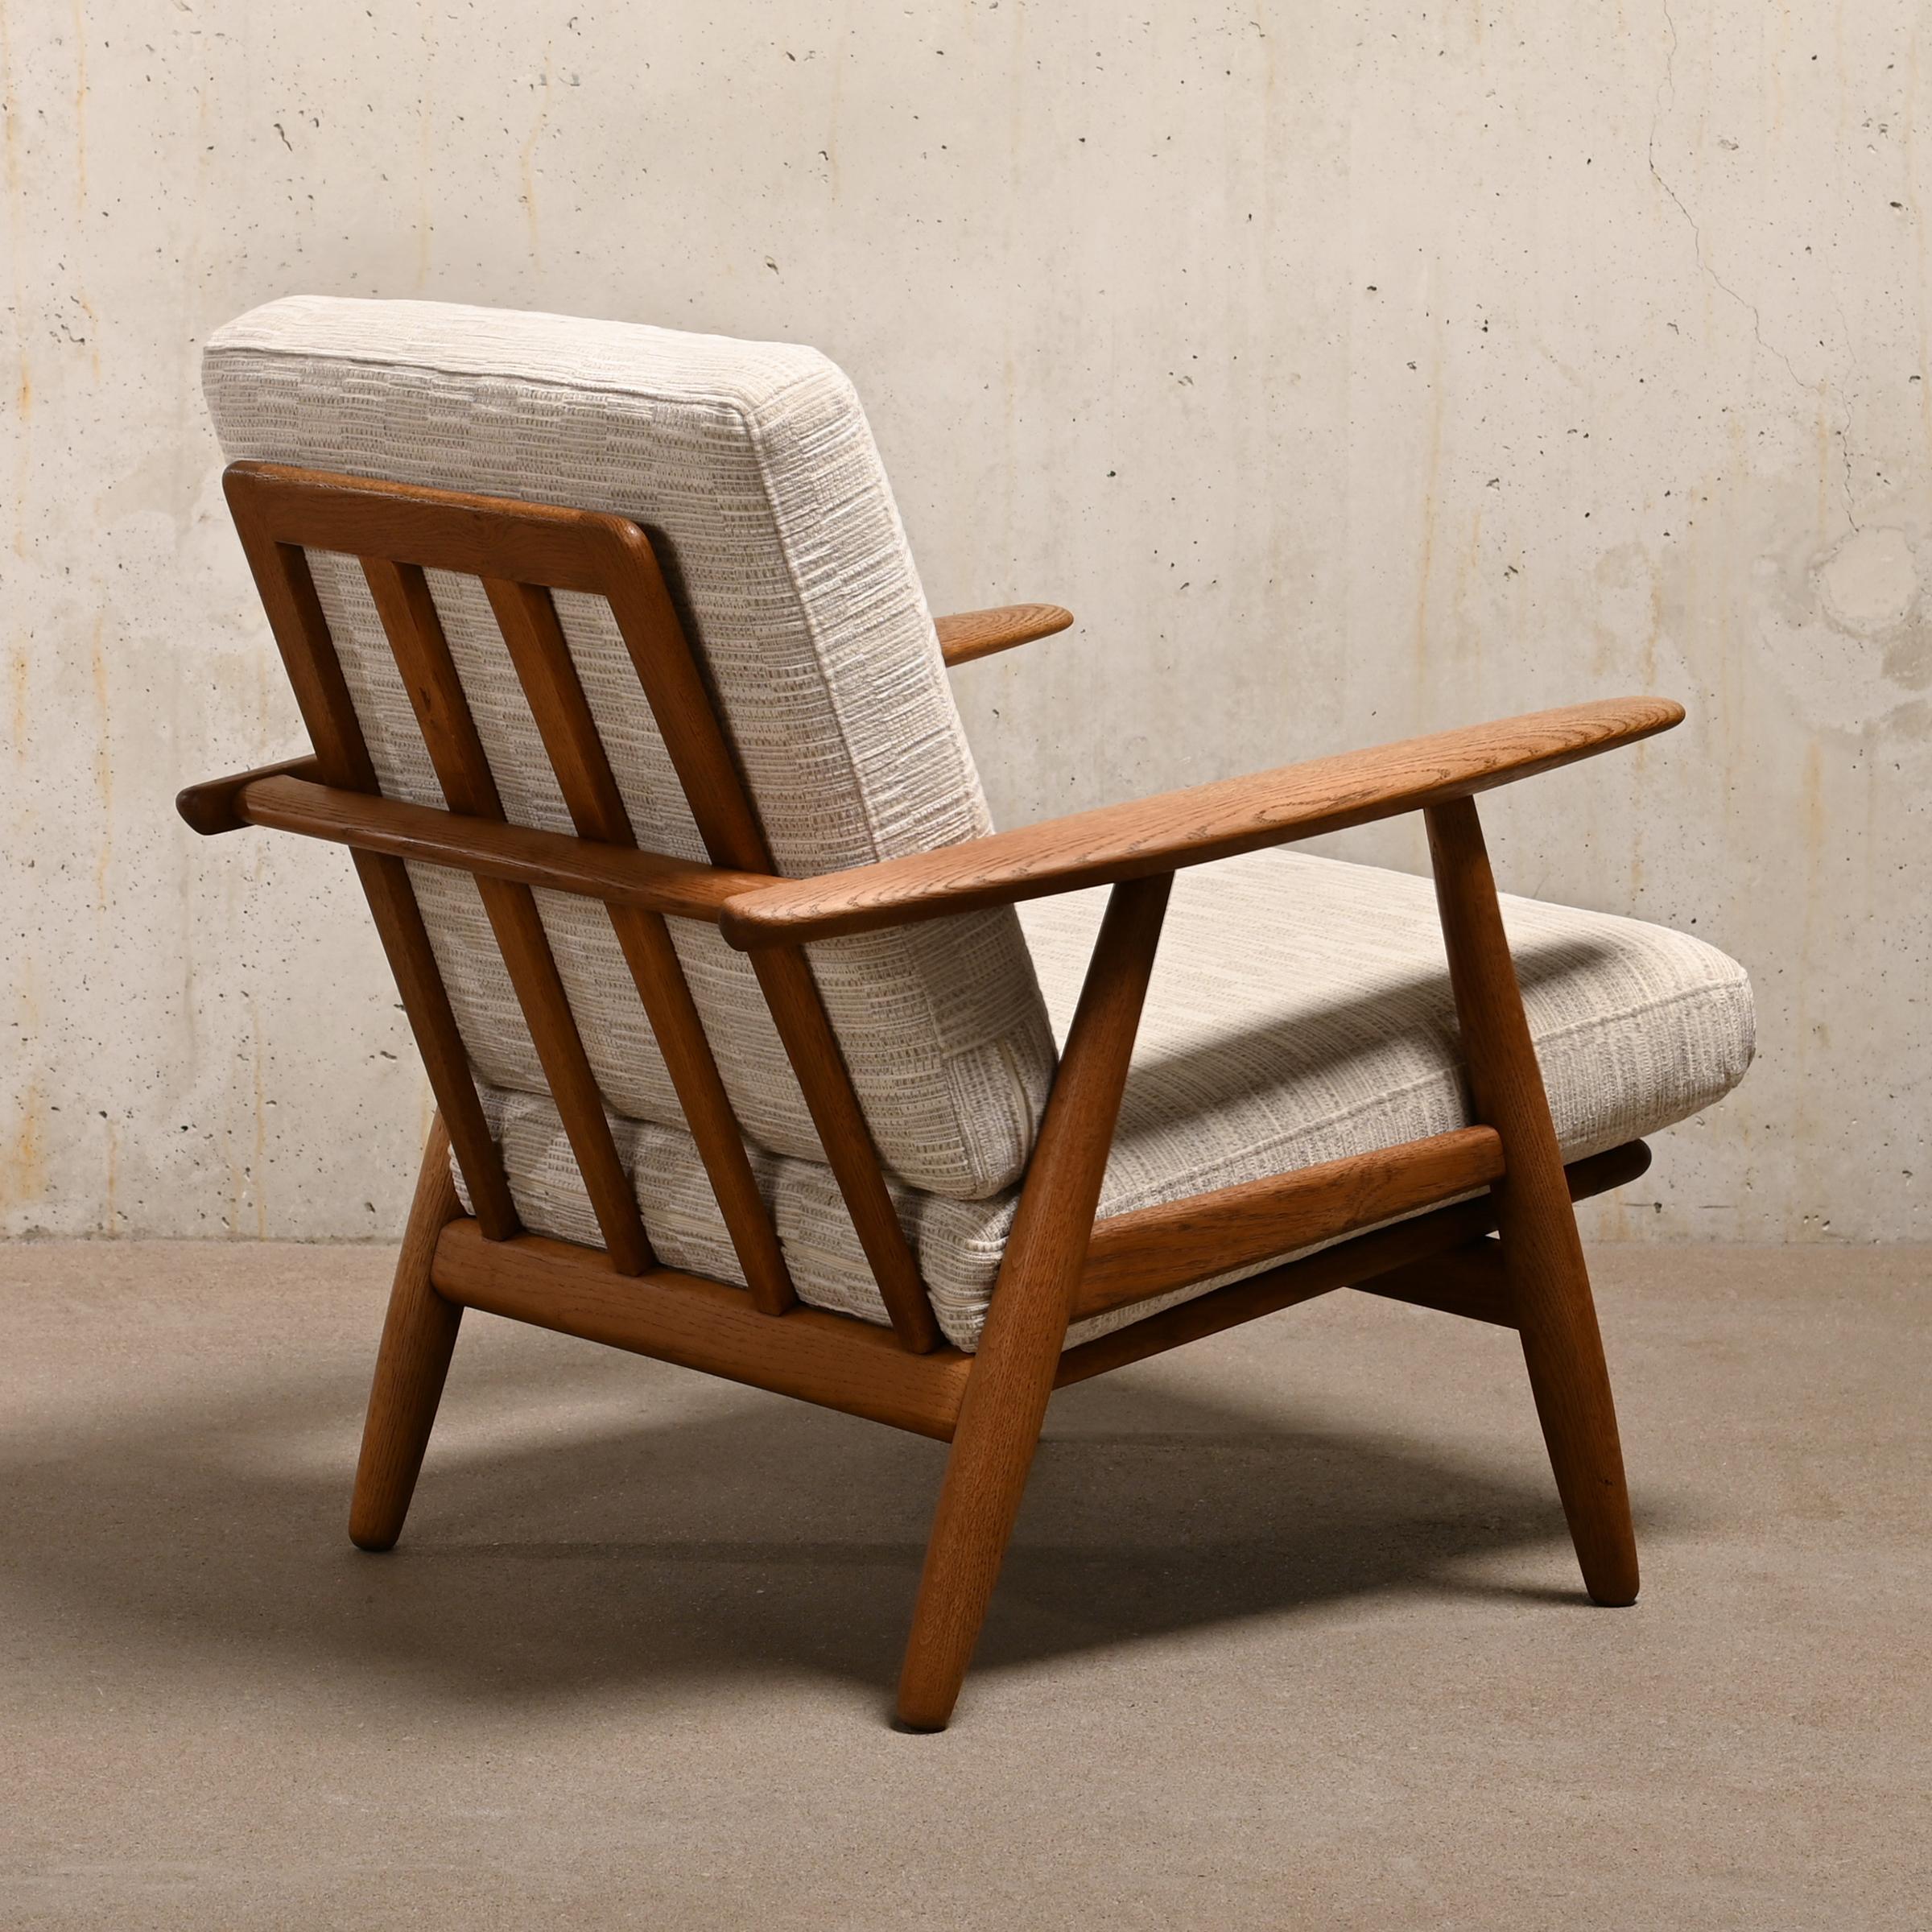 Mid-20th Century Hans J. Wegner GE240 'Sigar' Lounge Chair in Oak and Pierre Frey Fabric, Denmark